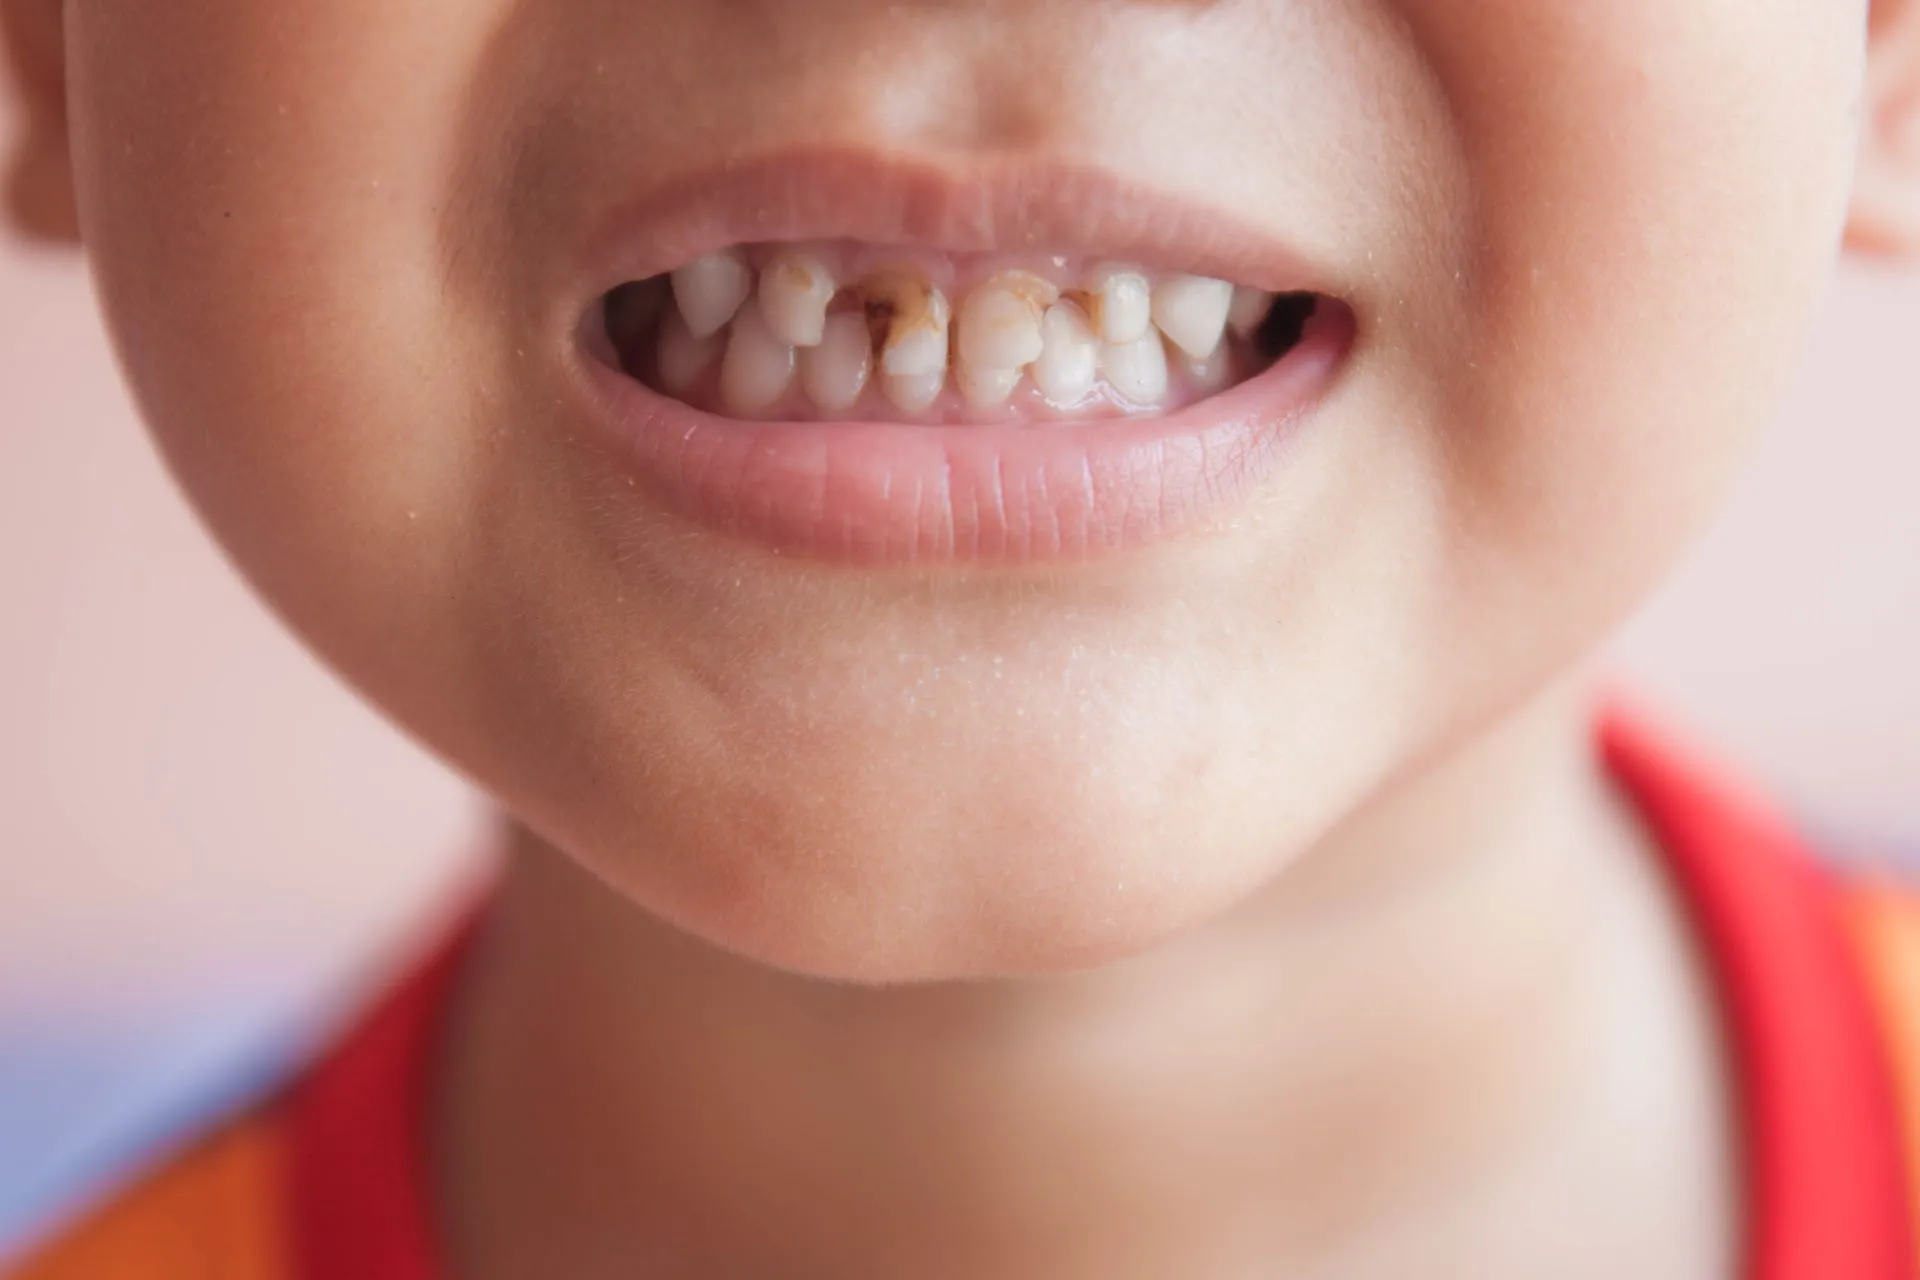 80% Trẻ em từ 6-8 tuổi bị sâu răng sữa